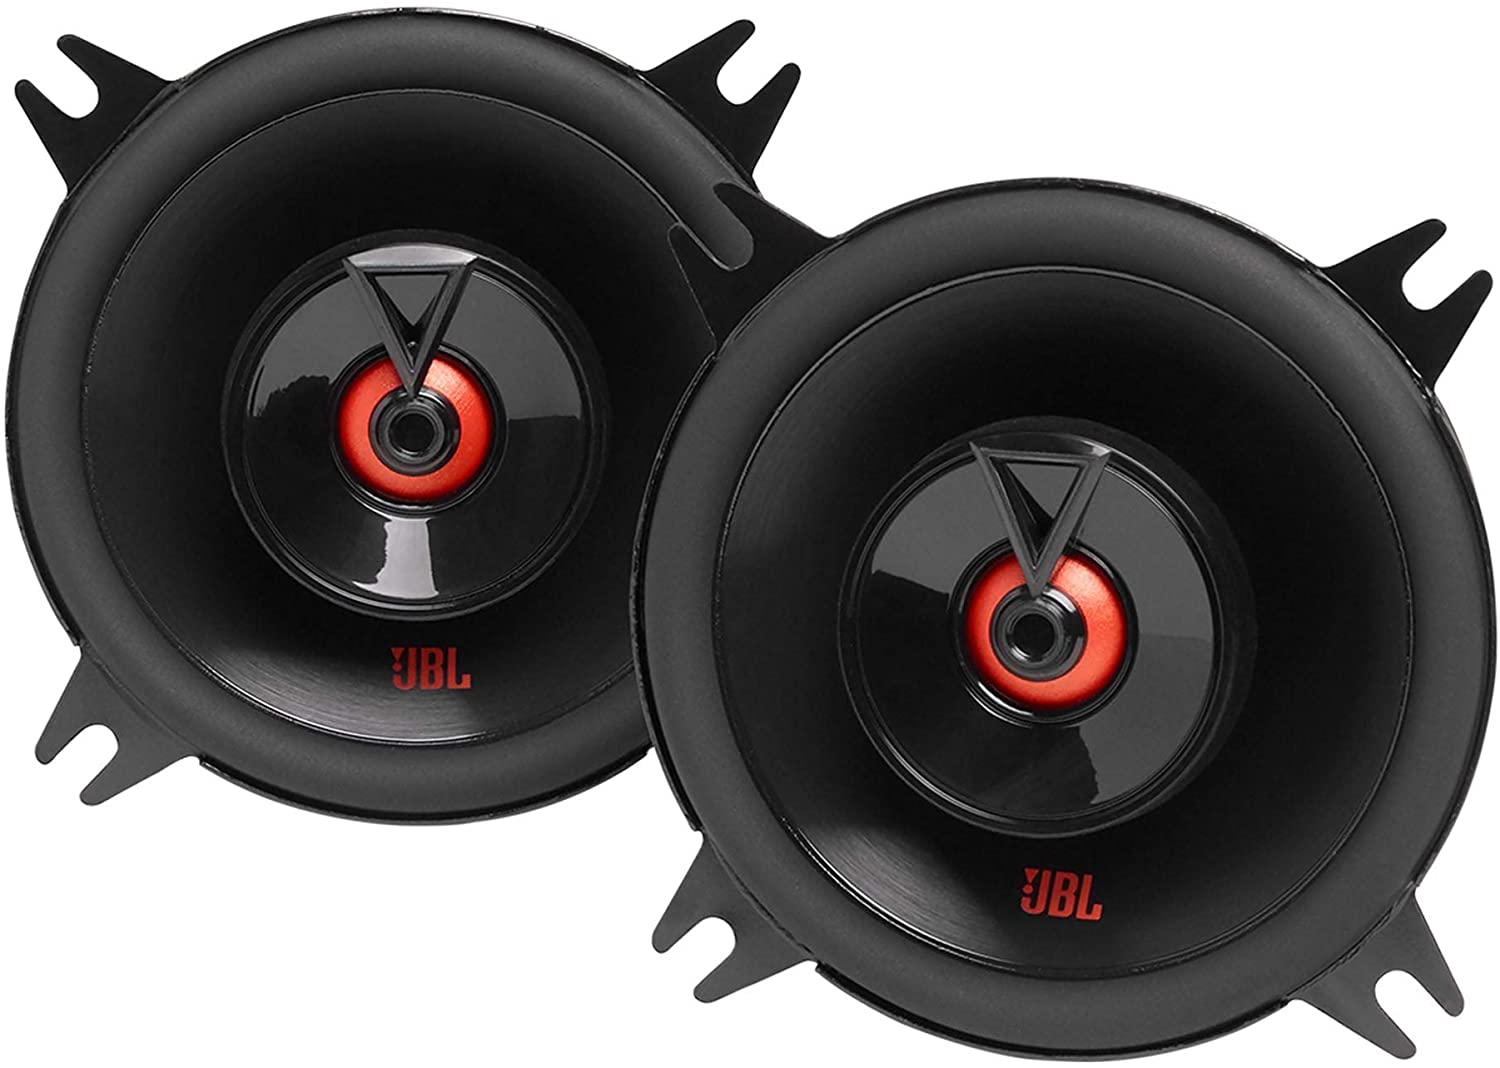 JBL CLUB 422F - 10 cm. speaker set | online now | SoundStoreXL